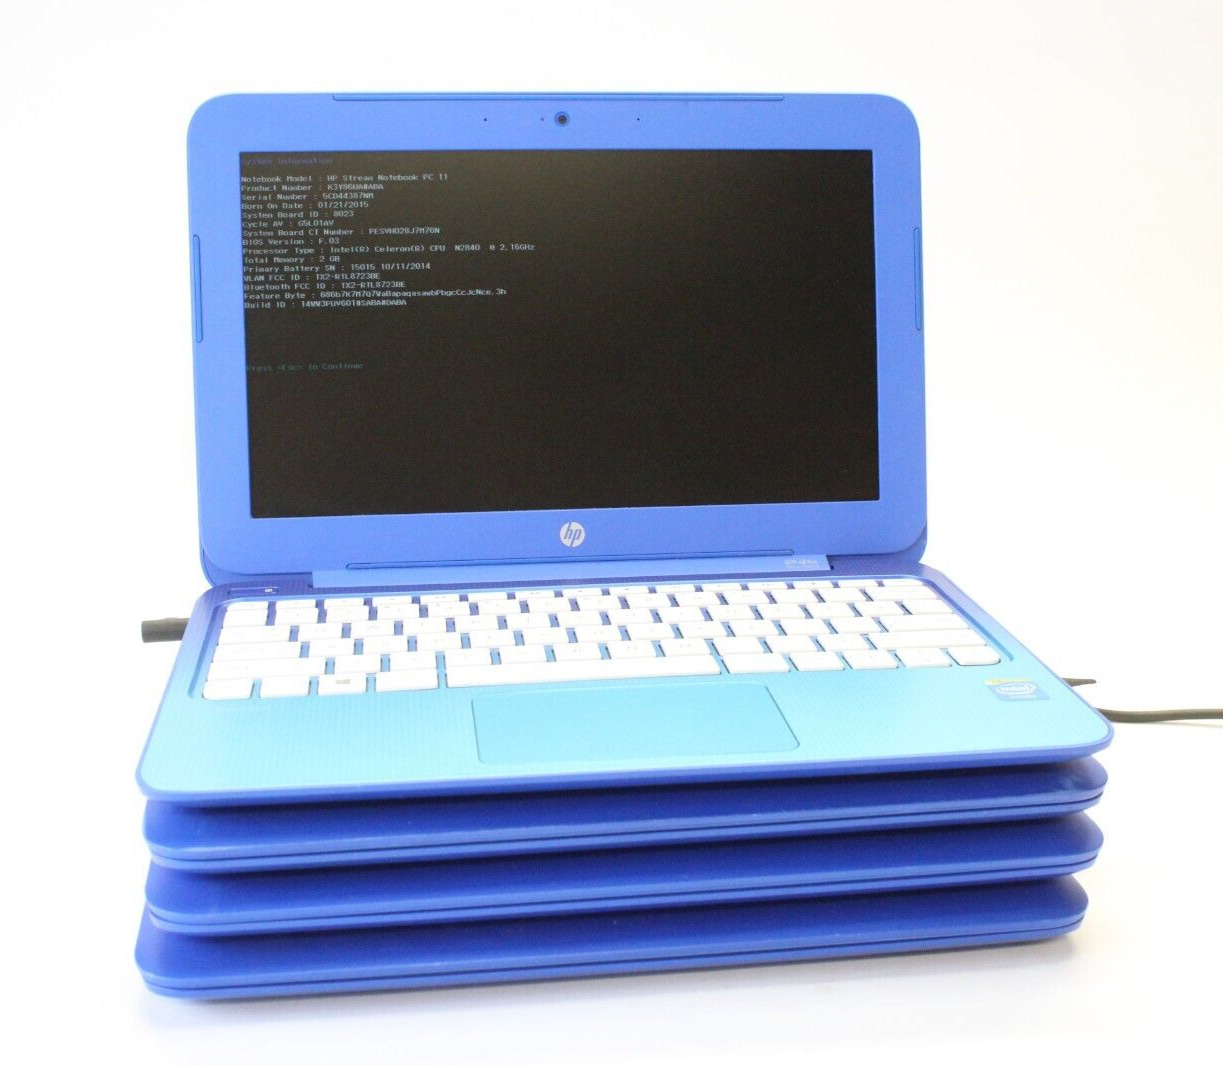 LOT OF 4 HP Stream 11-d077nr Laptop Intel Celeron N2840 2GB RAM FOR PARTS